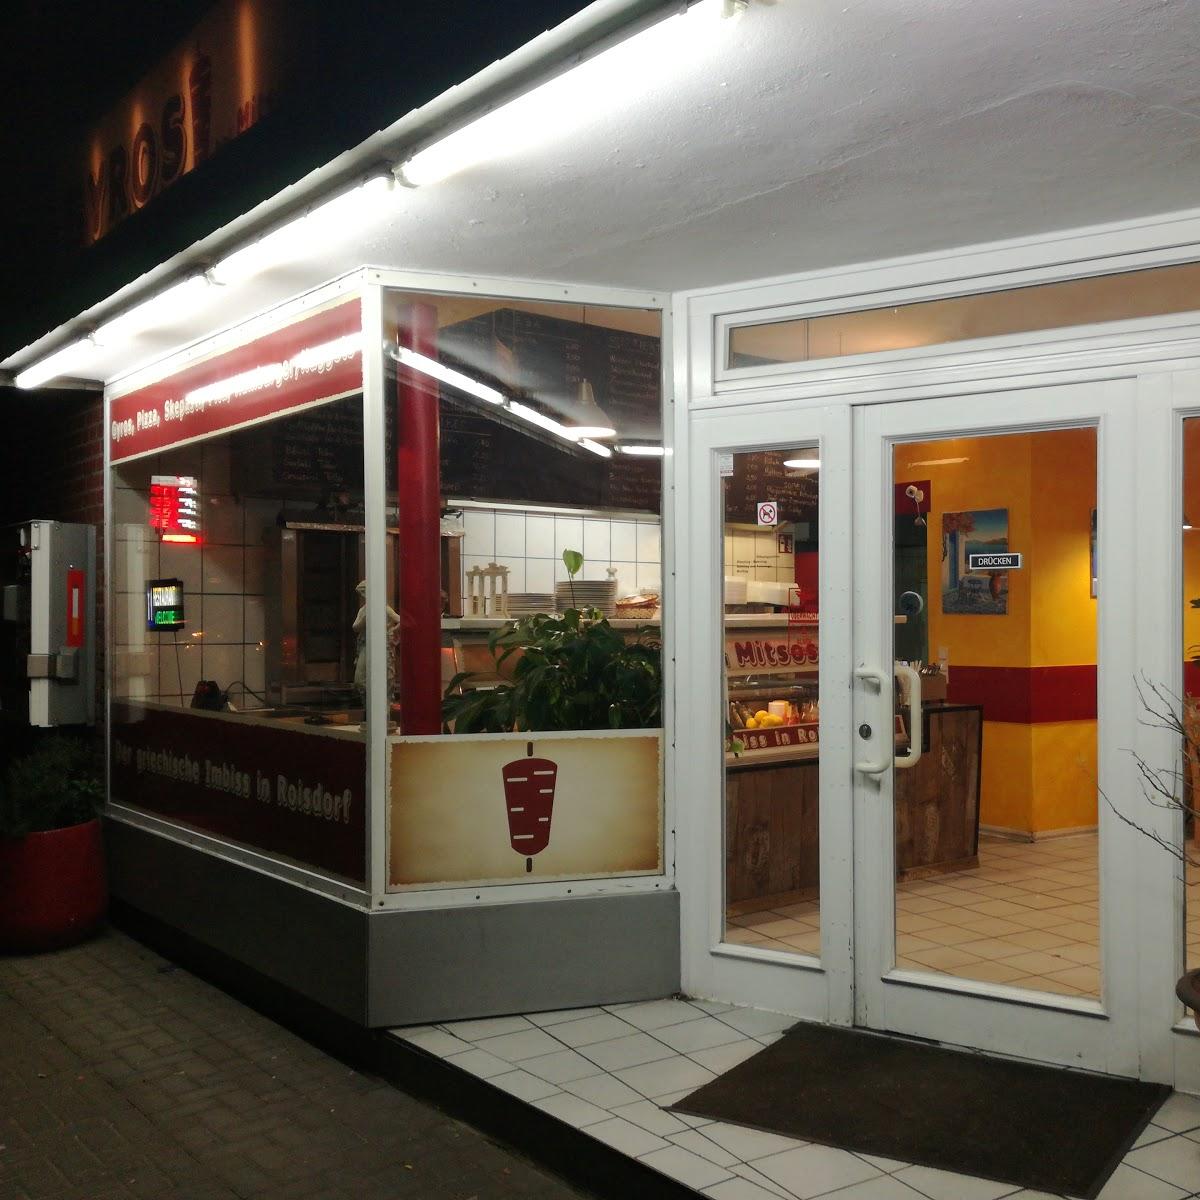 Restaurant "Gyro by Mitsos" in Bornheim